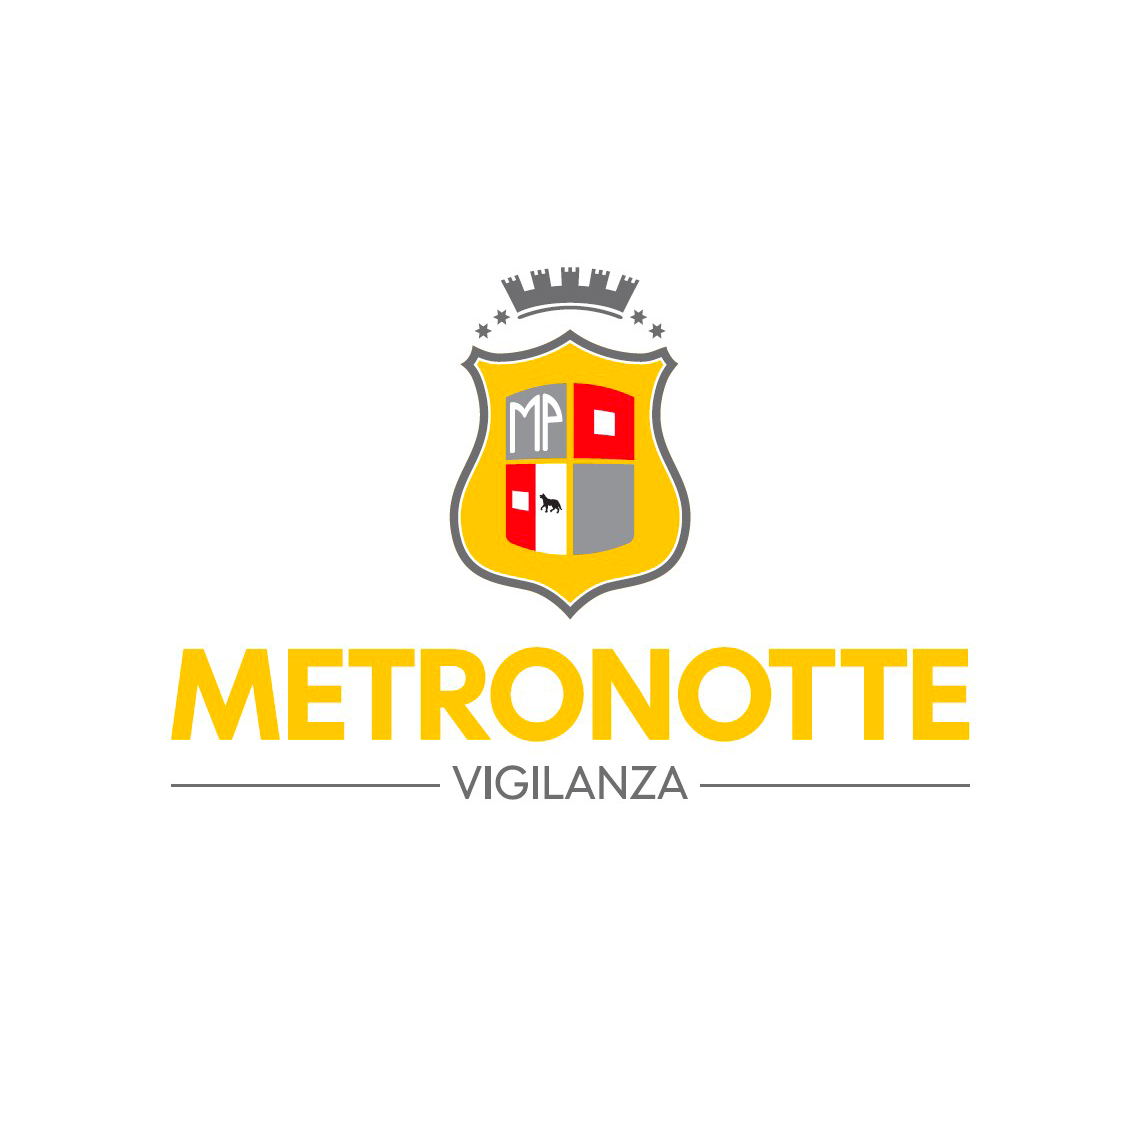 Metronotte Piacenza